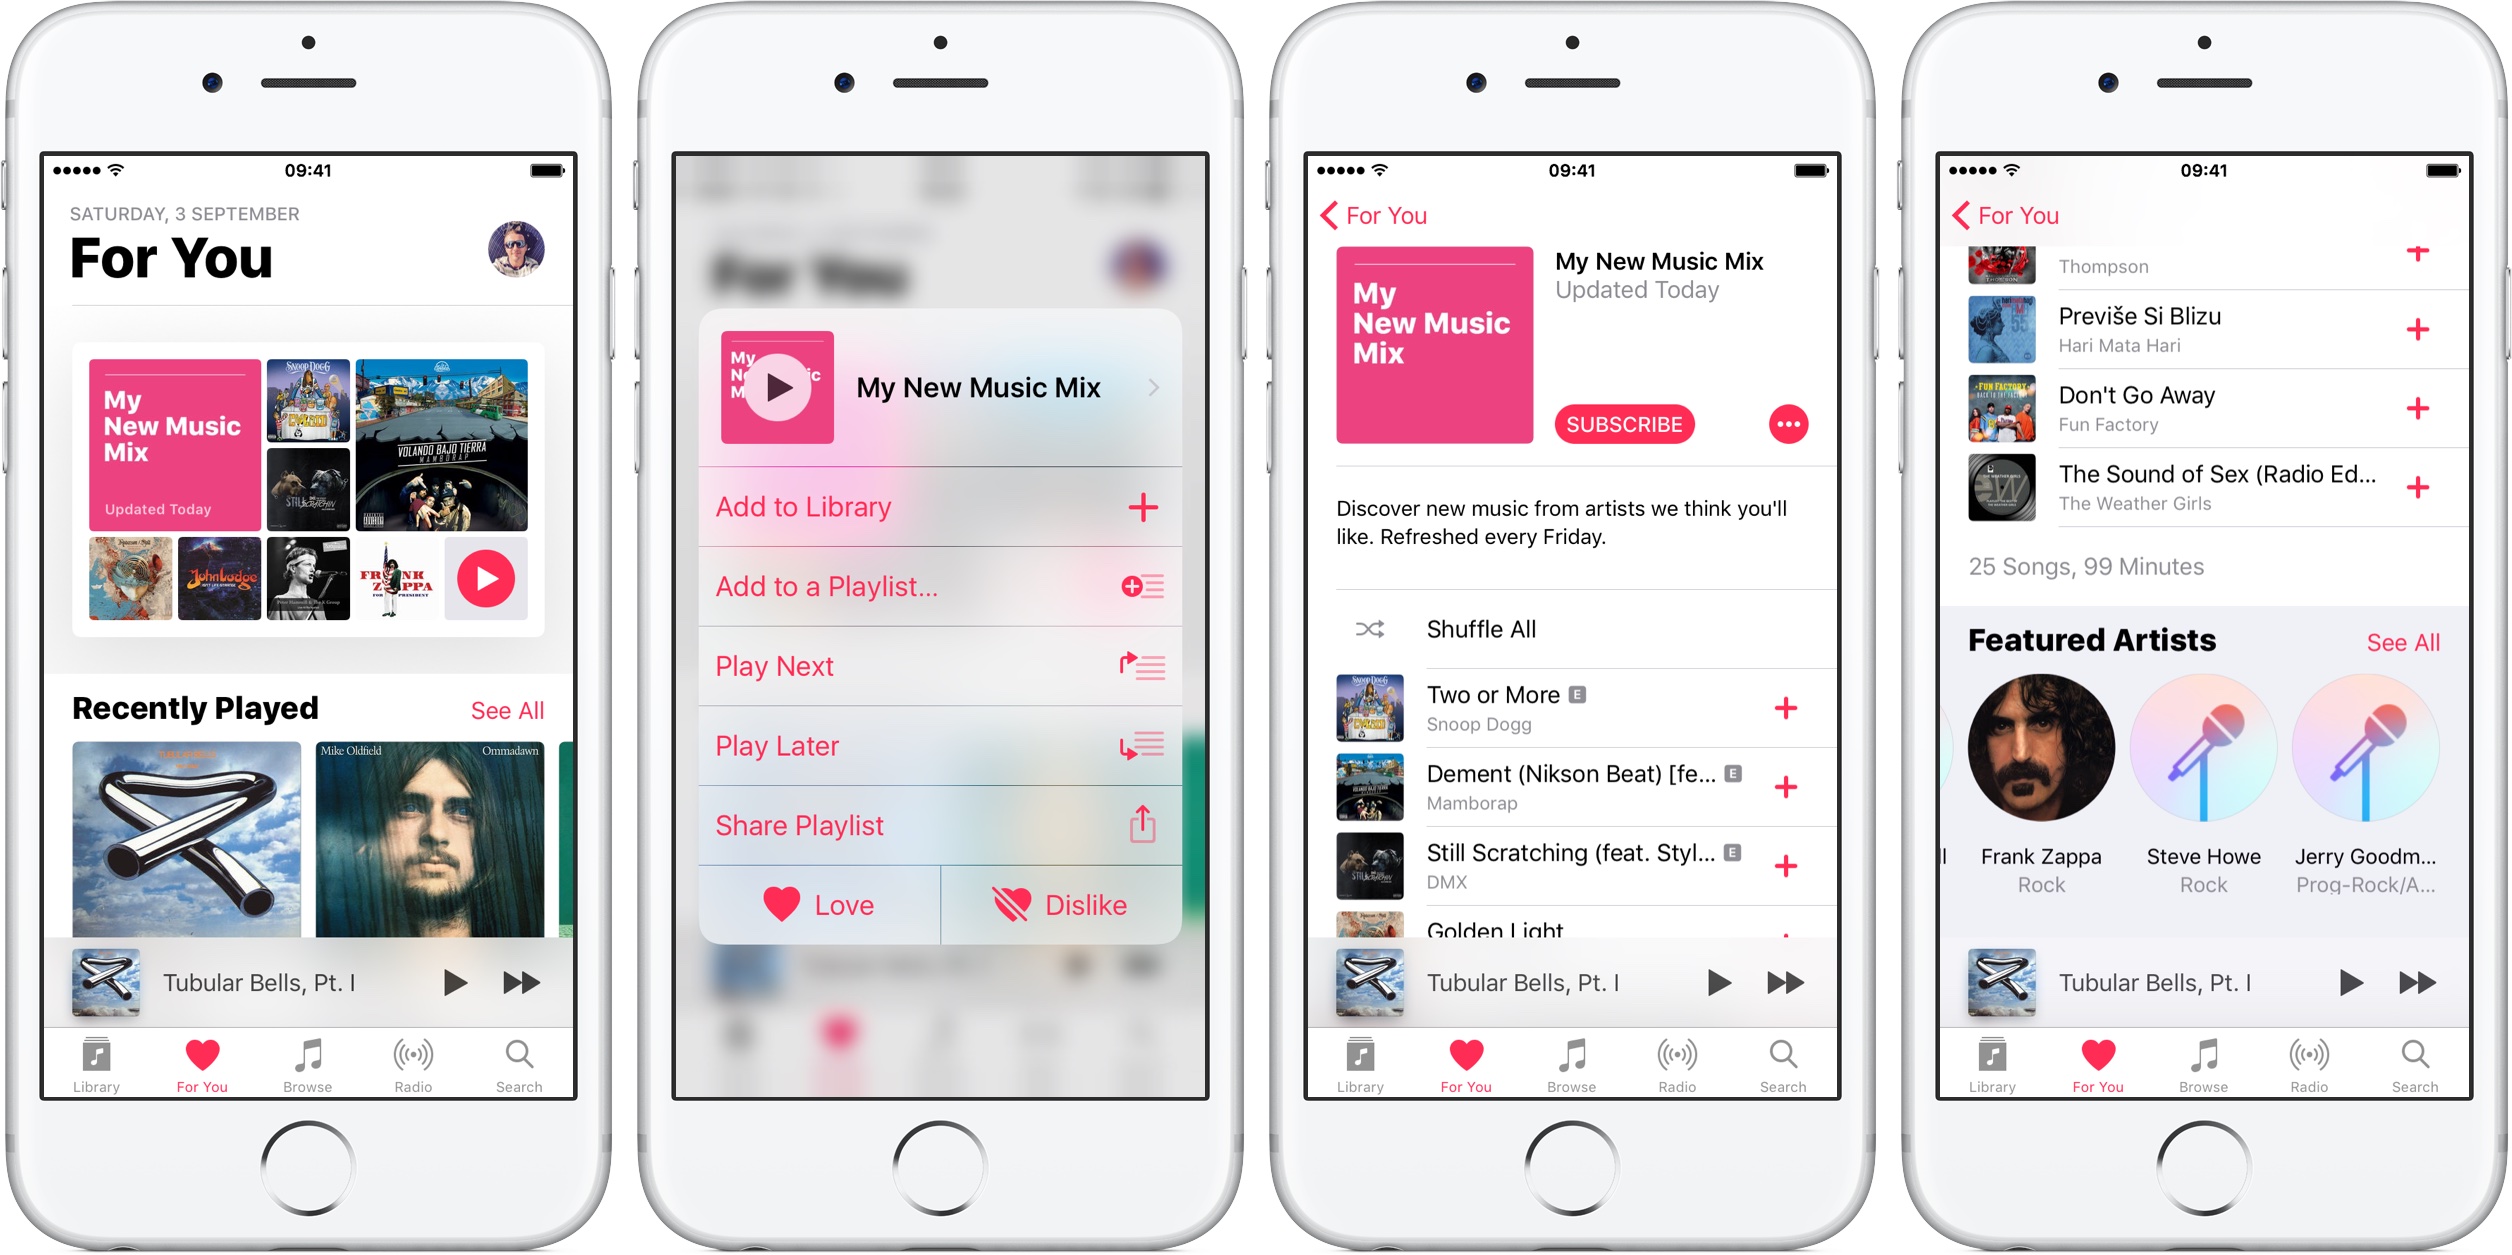 iOS 10 My New Music Mix silver iPhone screenshot 001